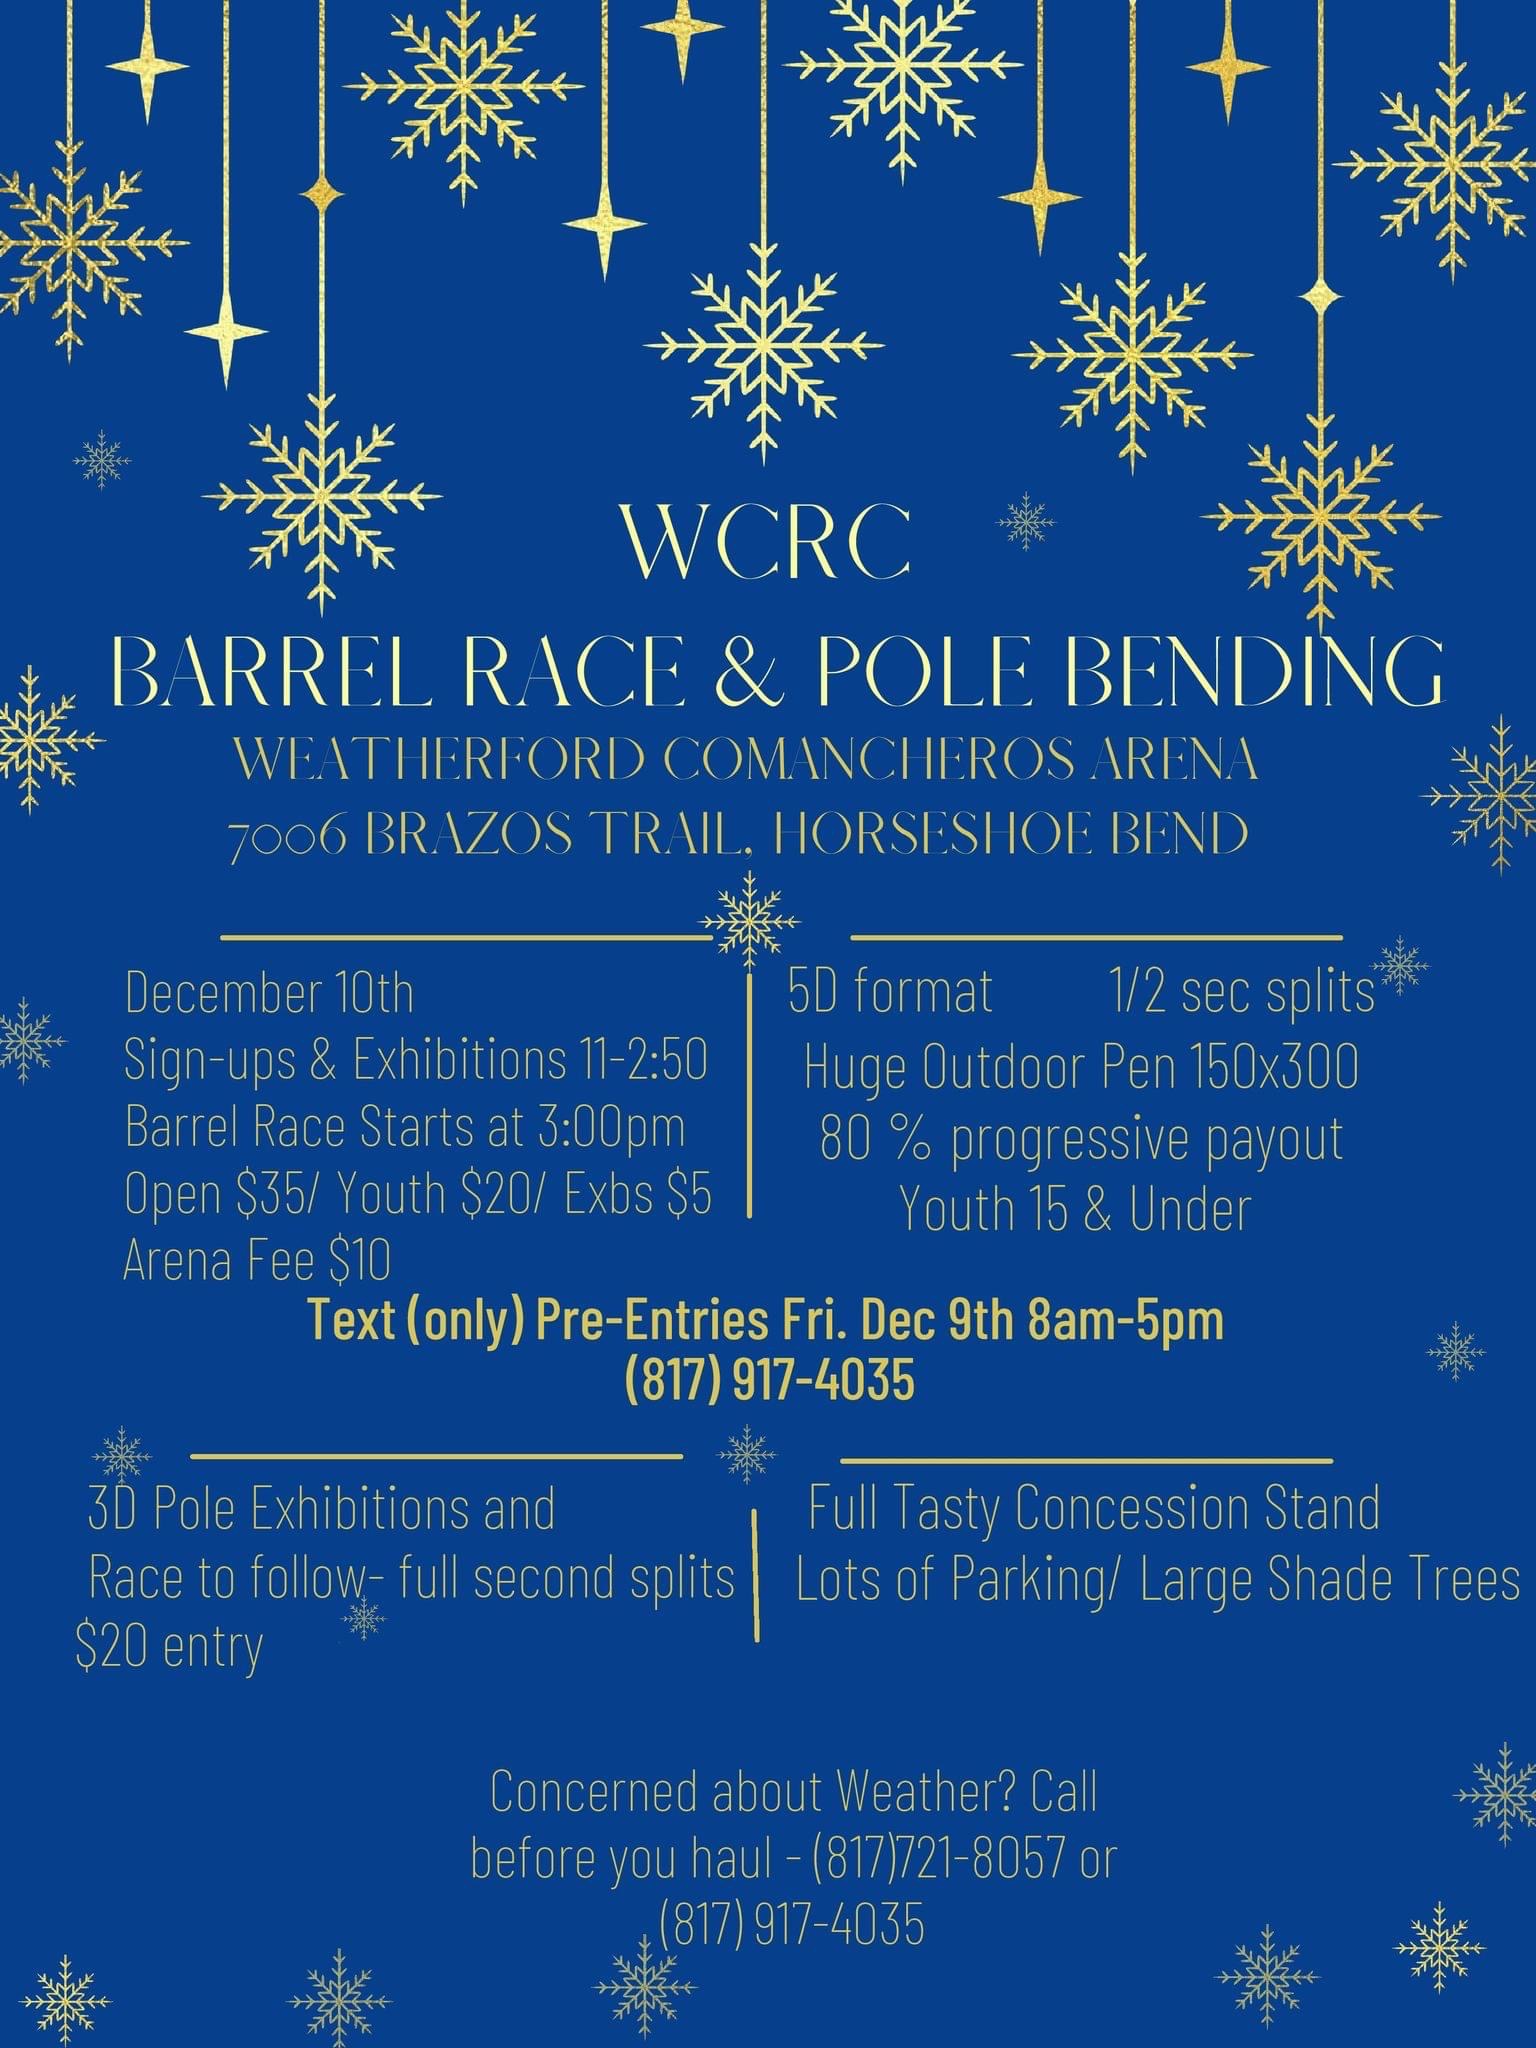 WCRC Barrel Race & Pole Bending